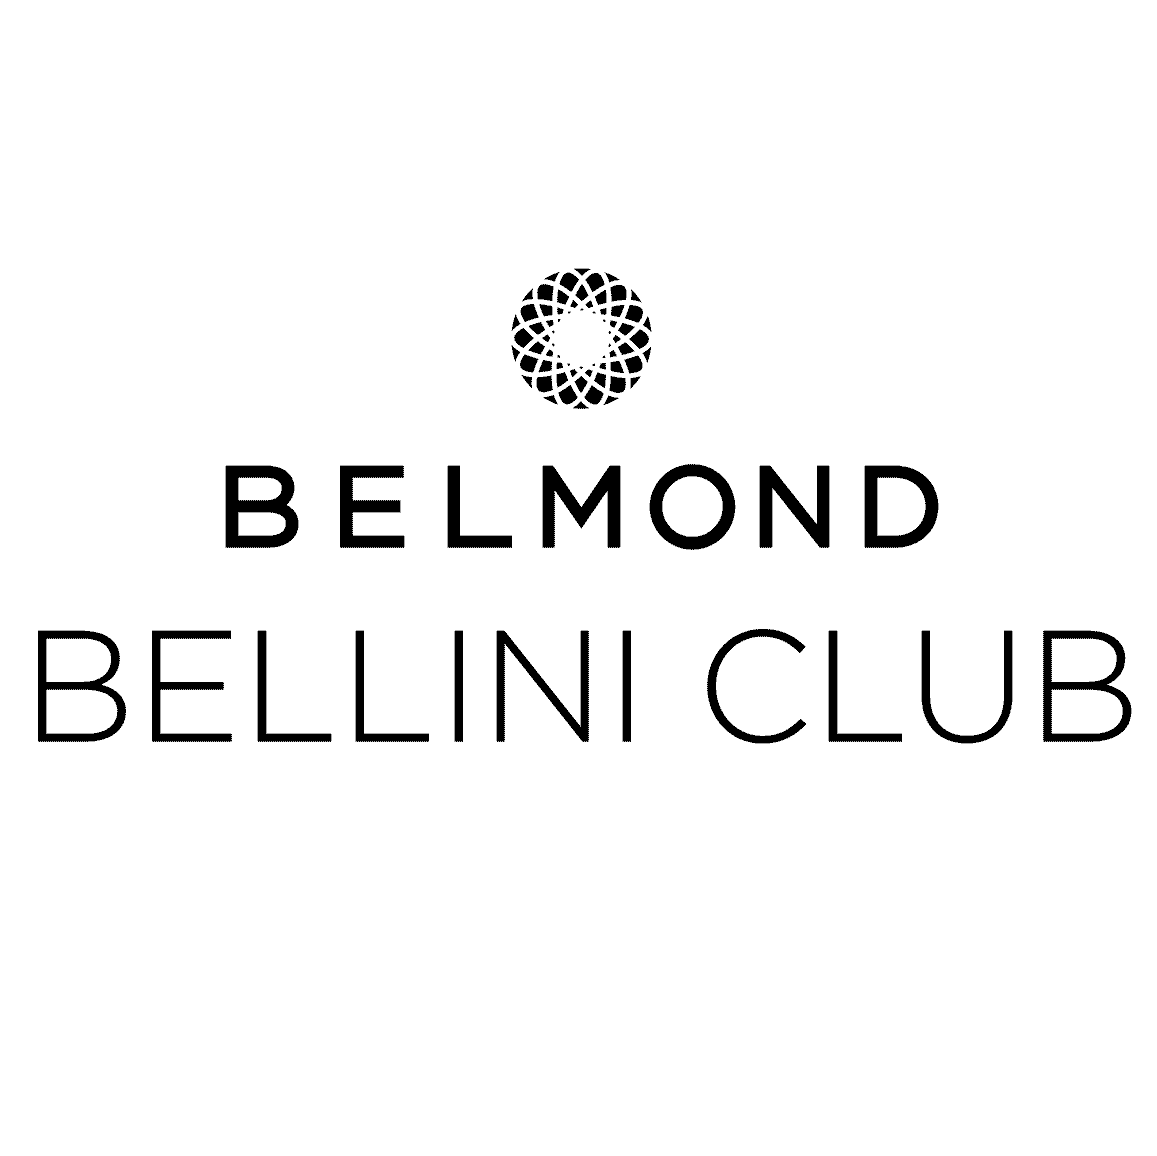 Bellini Club by Belmond